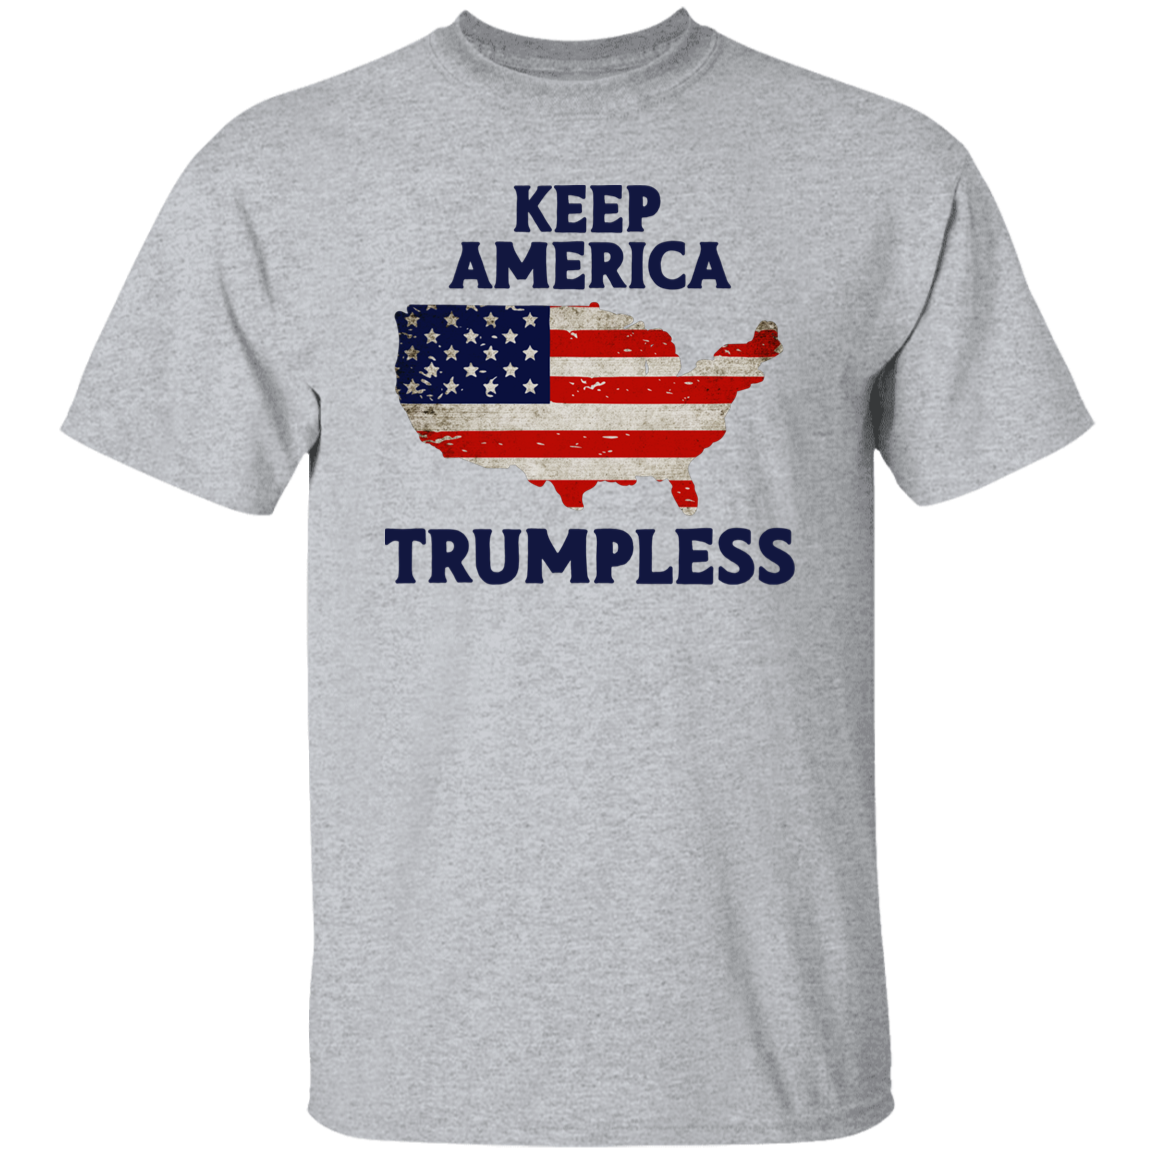 Trumpless America T-Shirt